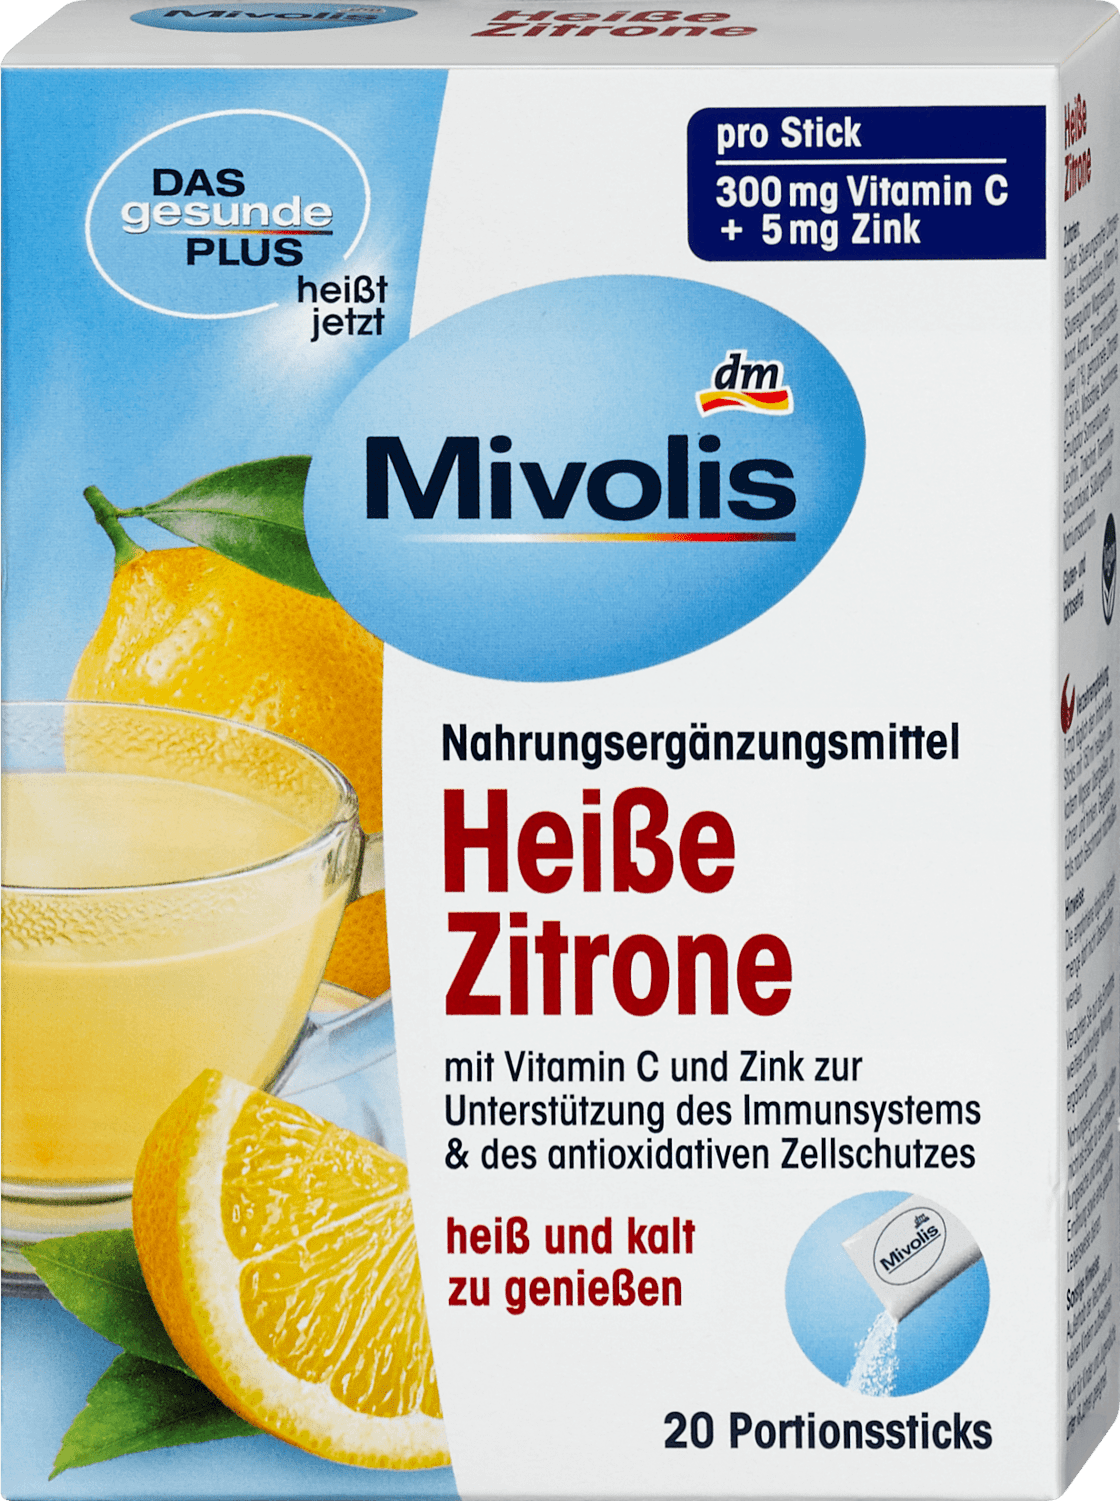 Mivolis Vitamin C Review